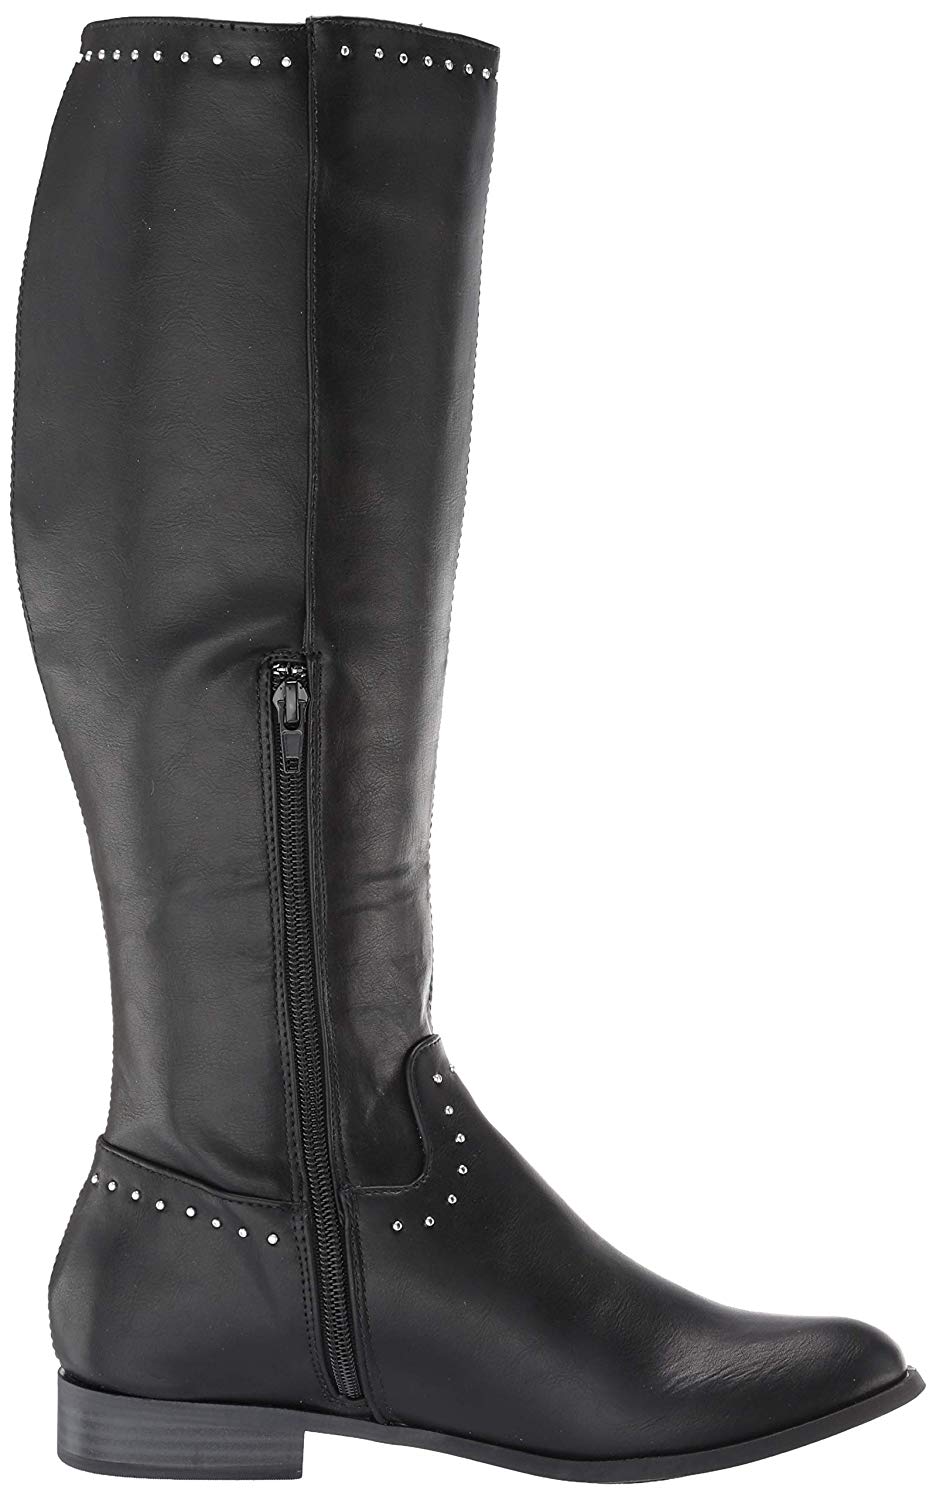 ESPRIT Womens Boots in Black Color, Size 8 WOP | eBay